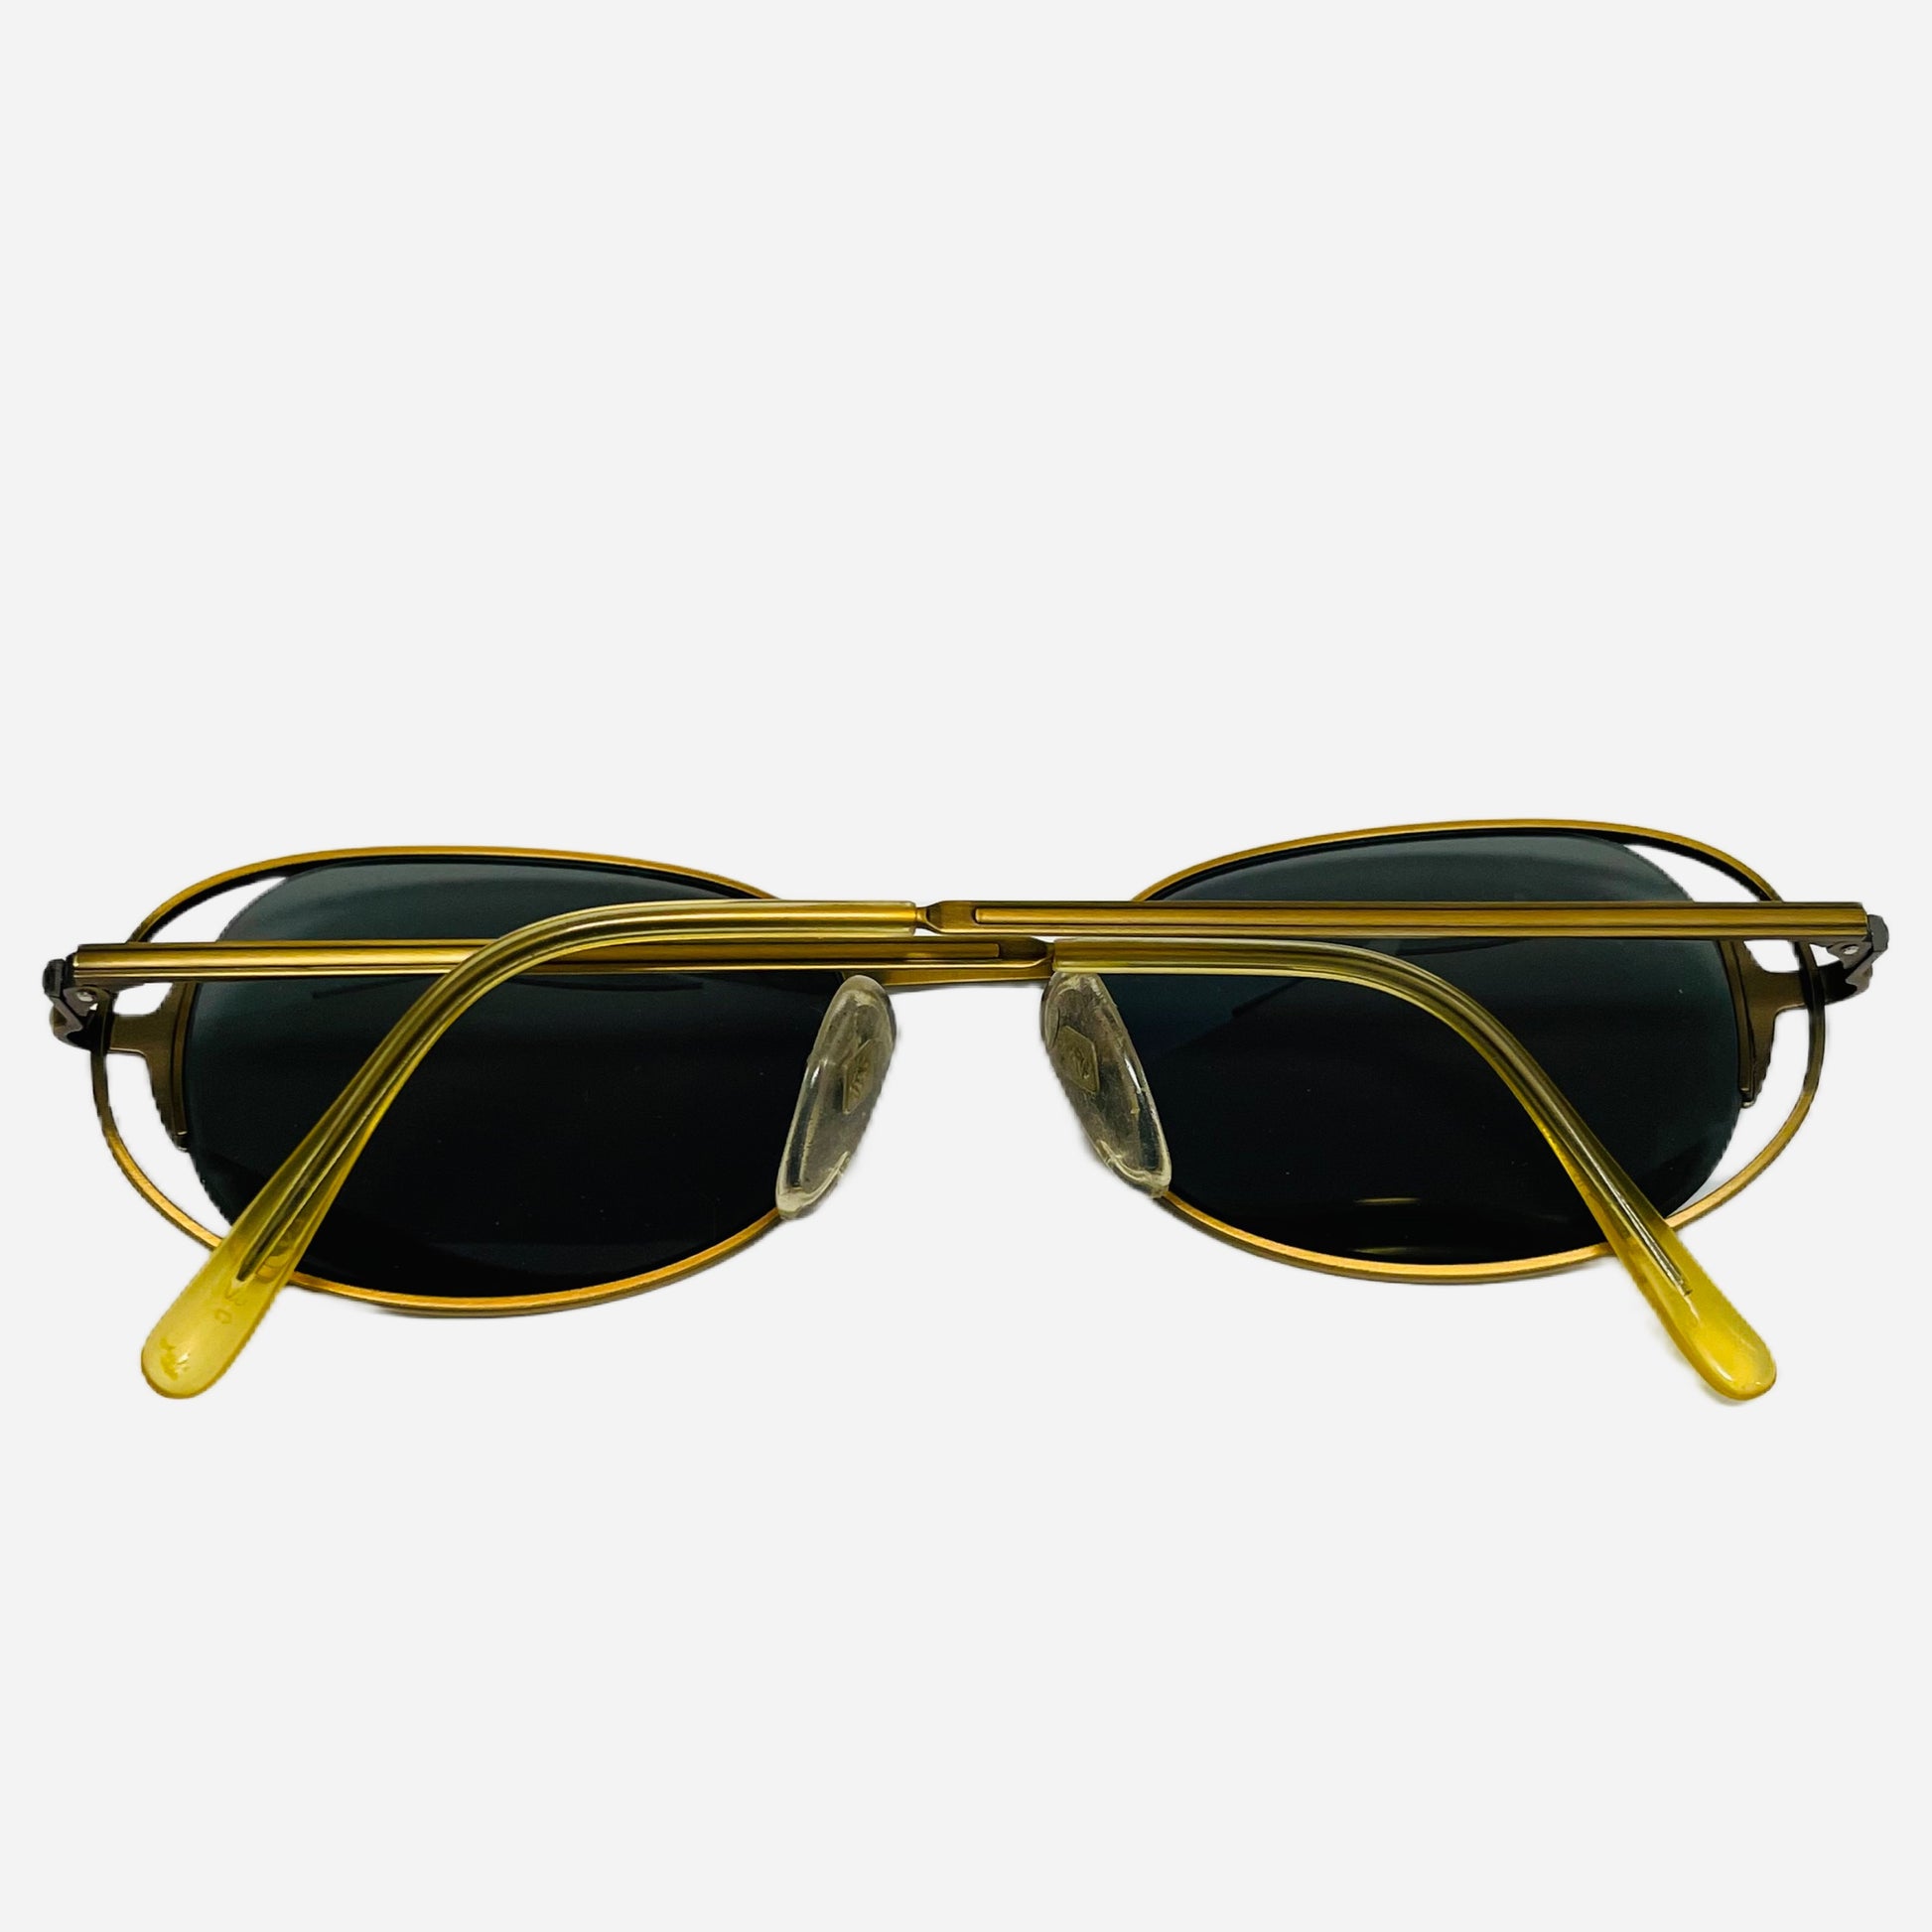 Vintage-Jean-Paul-Gaultier-Sonnenbrille-Sunglasses-Model56-3172-made-in-japan-the-seekers-back